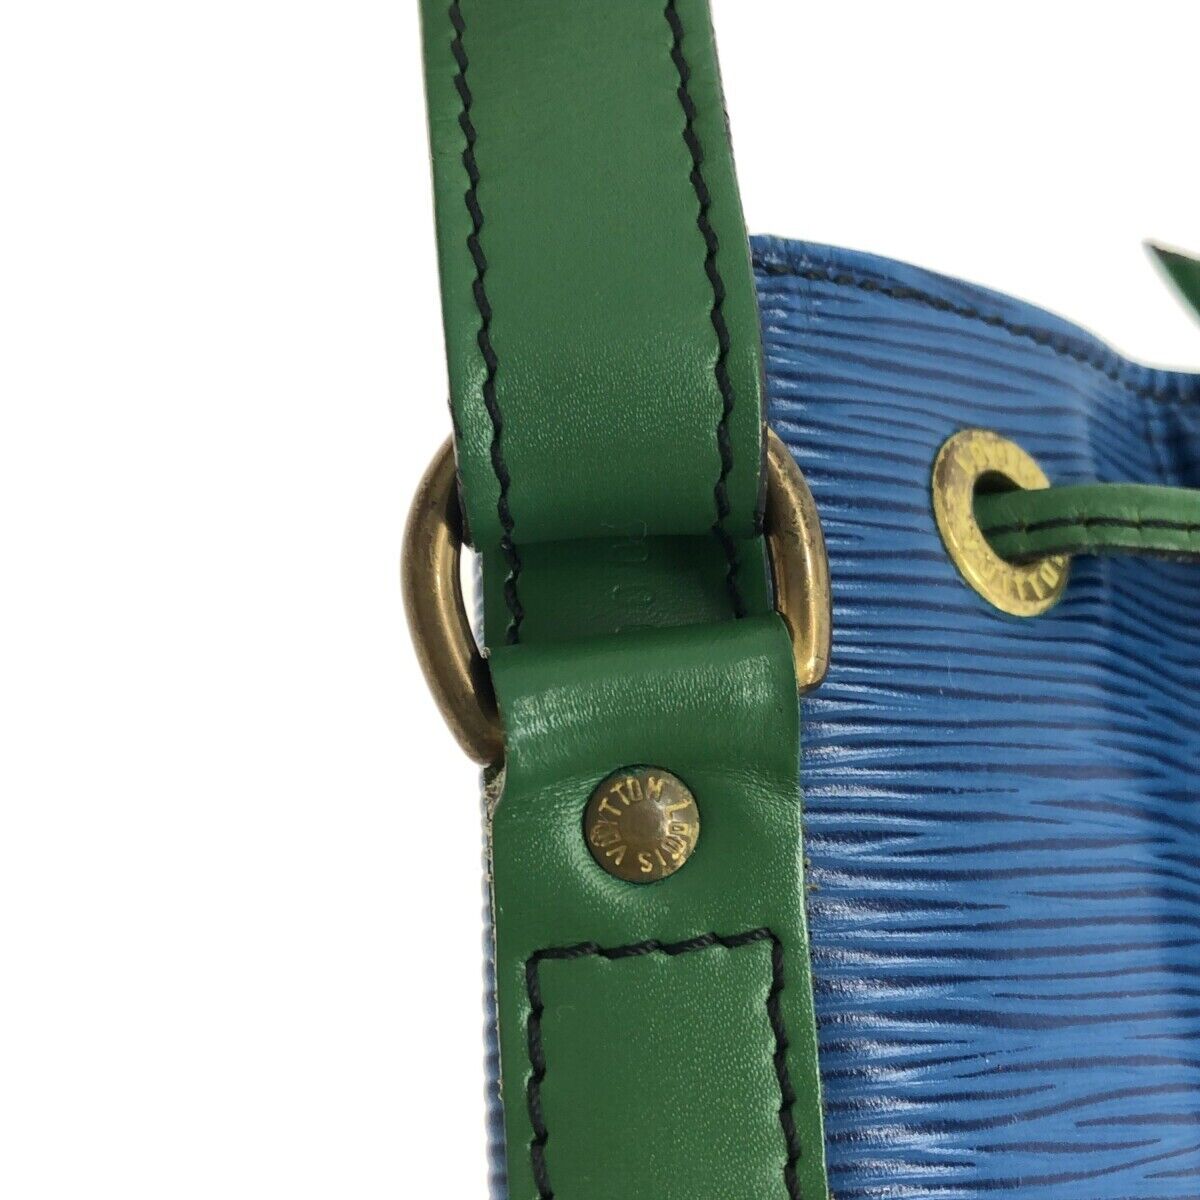 Auth Louis Vuitton Paris LV Noe Blue/Green Leather Women’s Drawstring  Bucket Bag